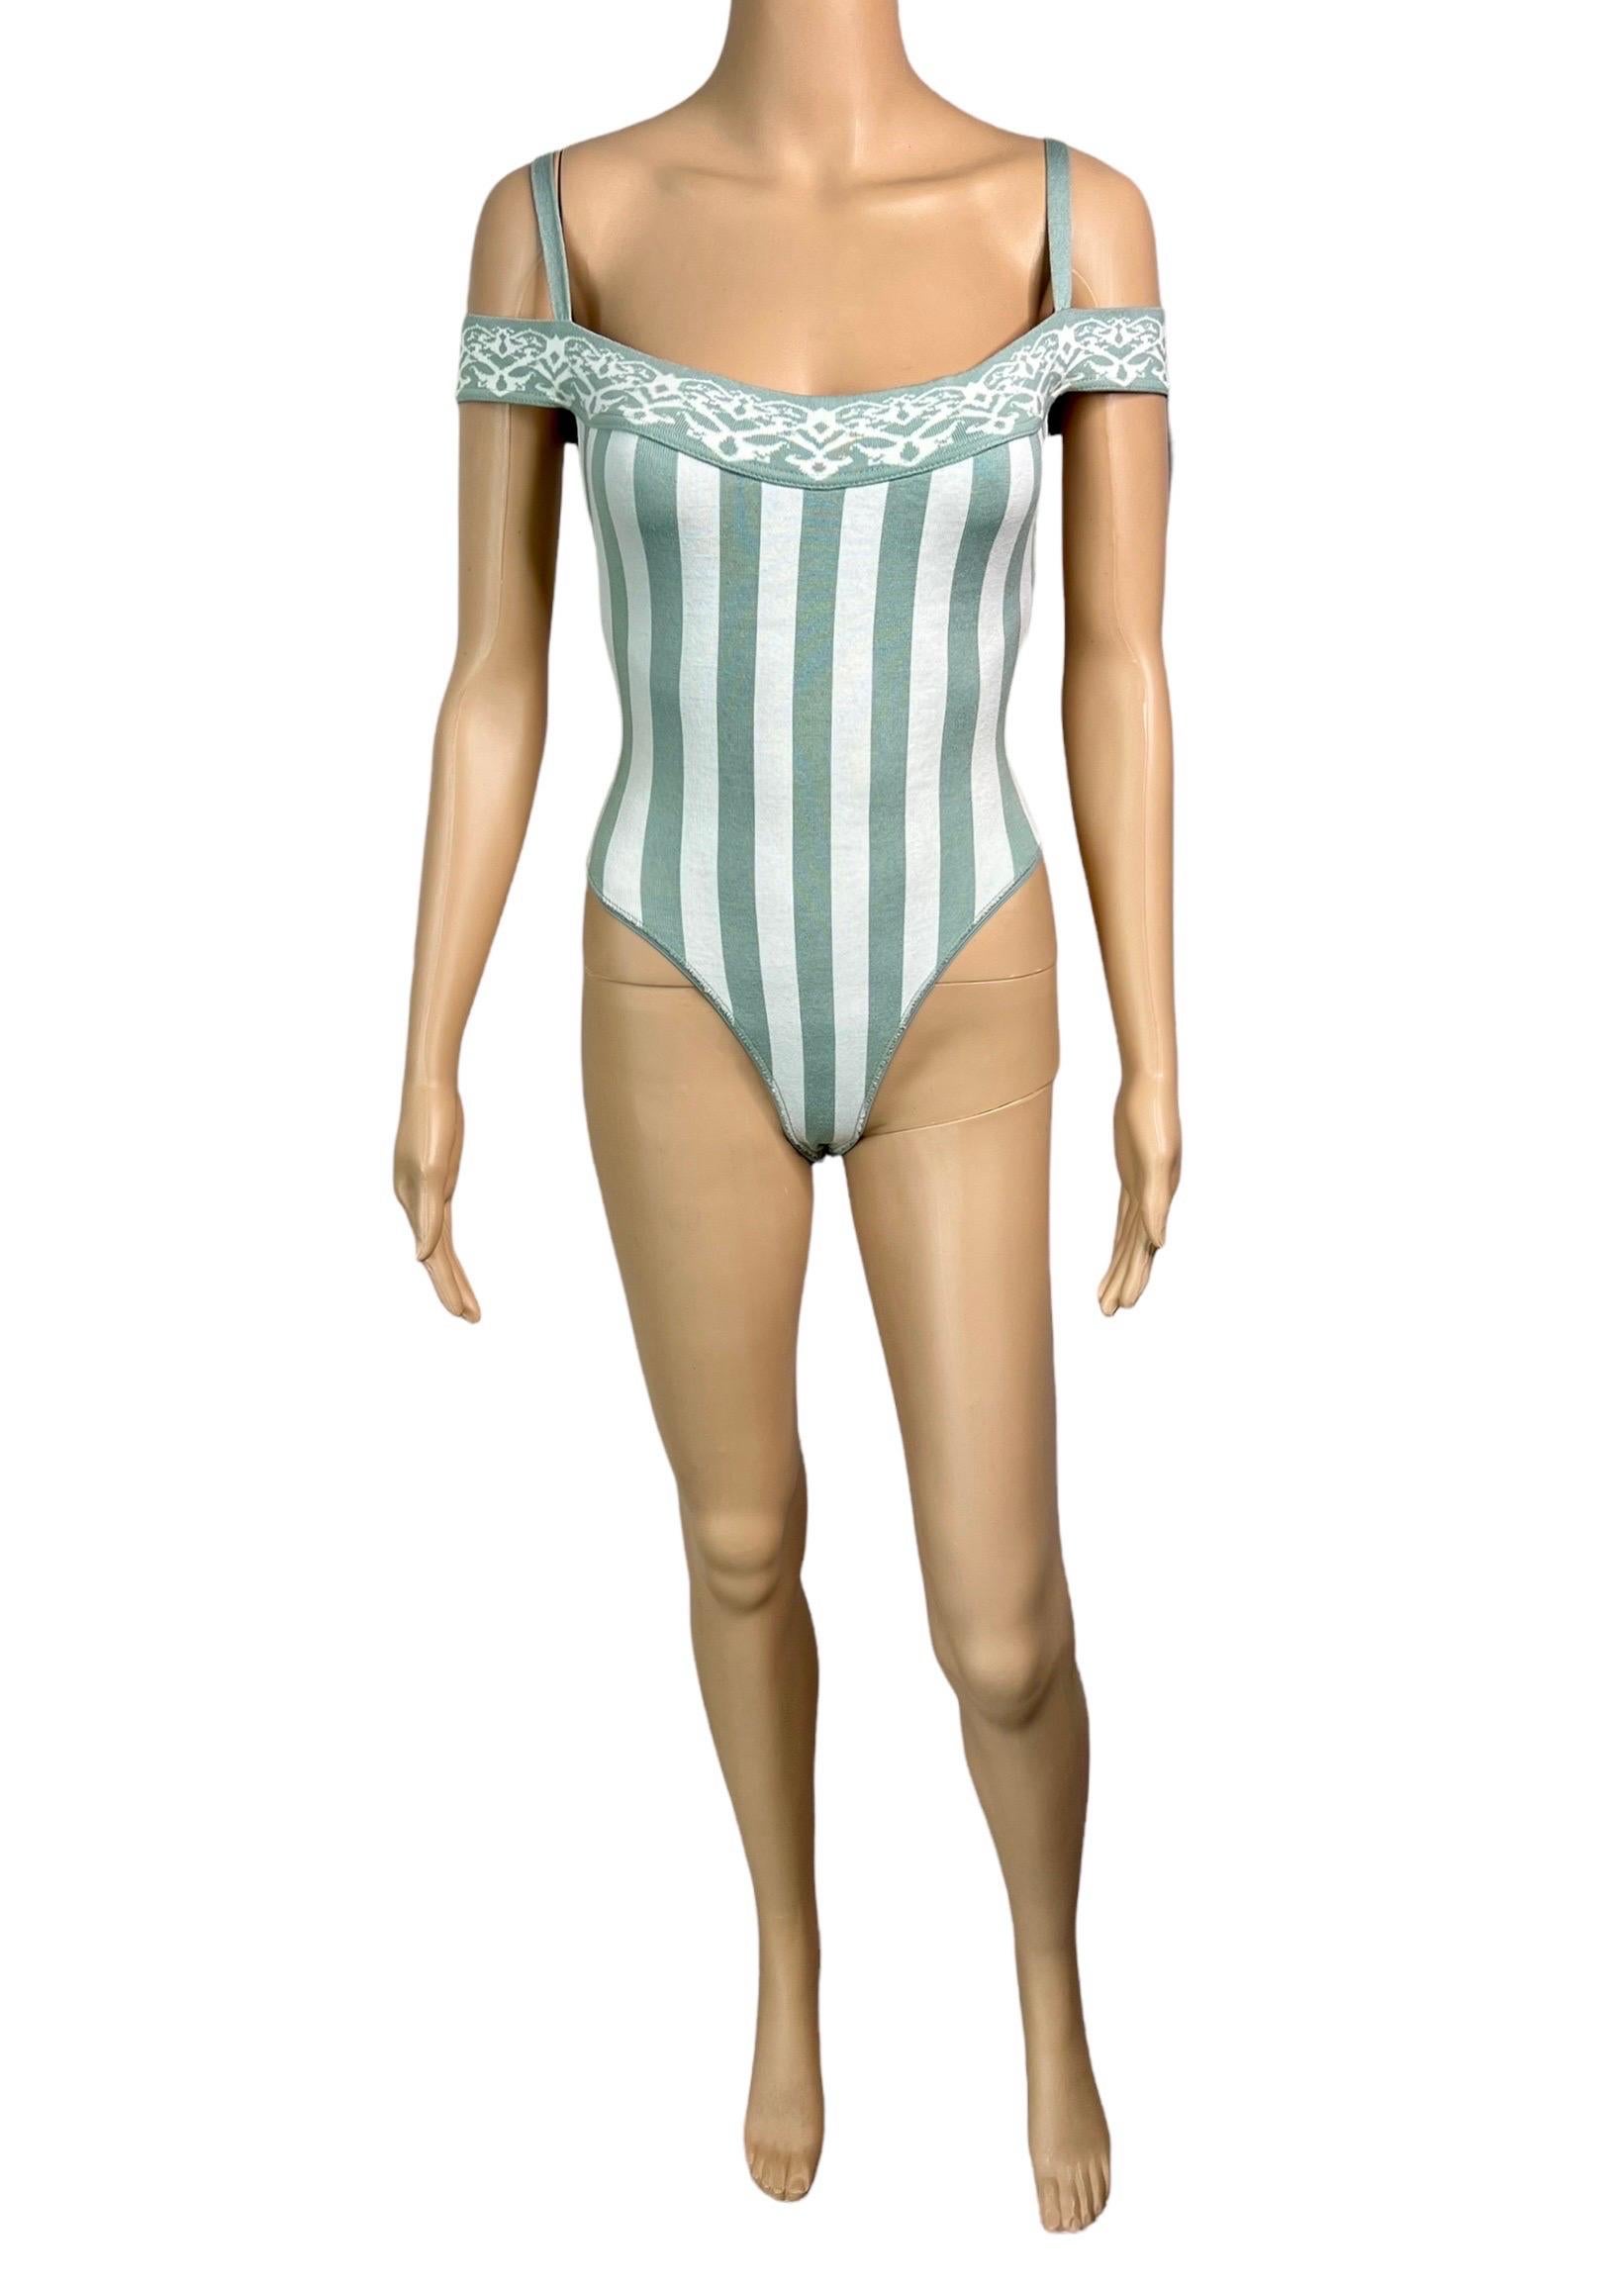 Azzedine Alaia S/S 1992 Vintage Striped Bodysuit Top and Mini Skirt 2 Piece Set For Sale 10